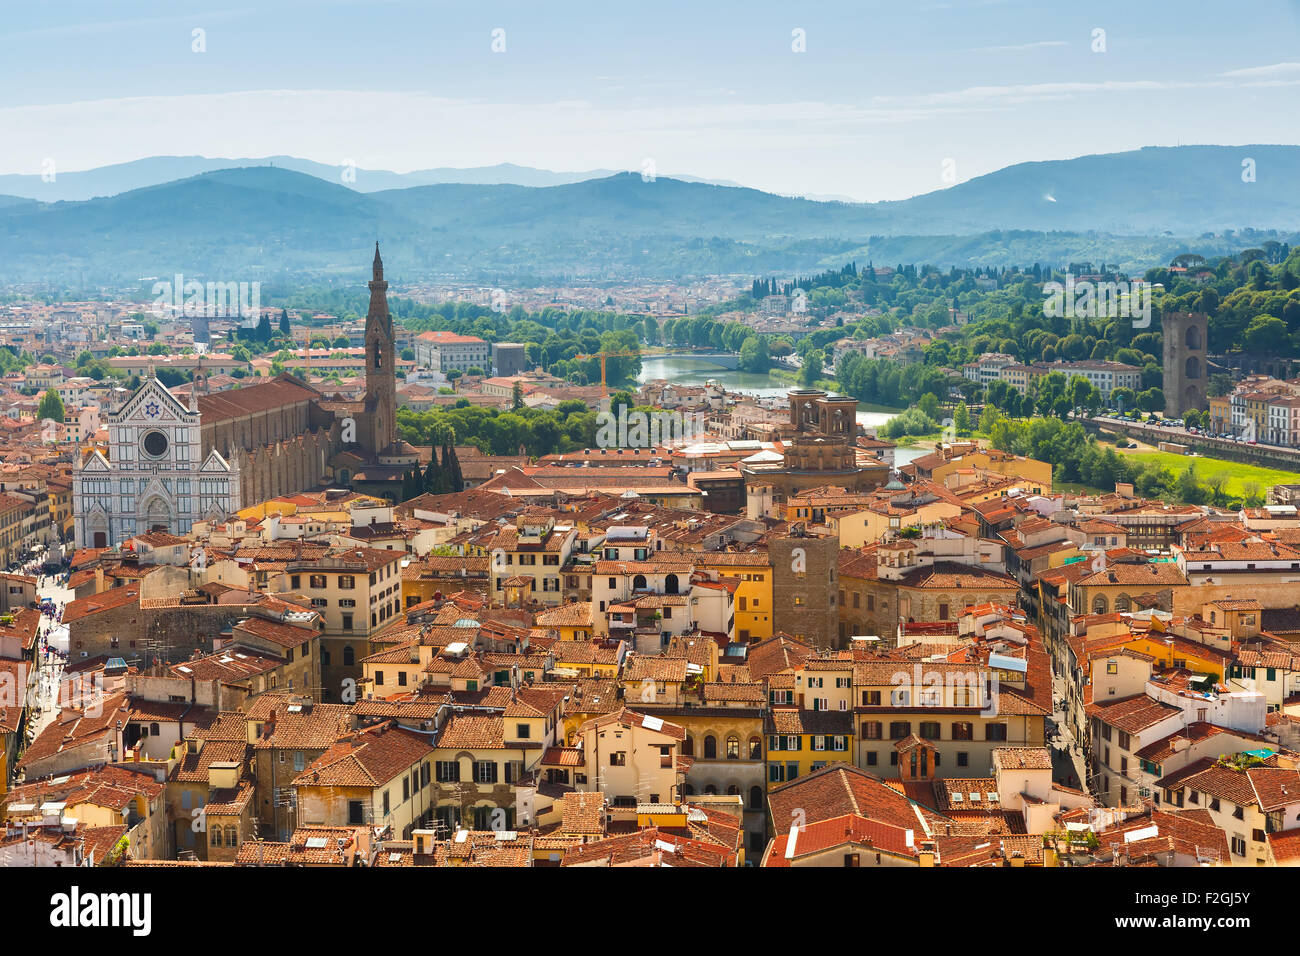 Basilica di Santa Croce in Florence, Italy Stock Photo